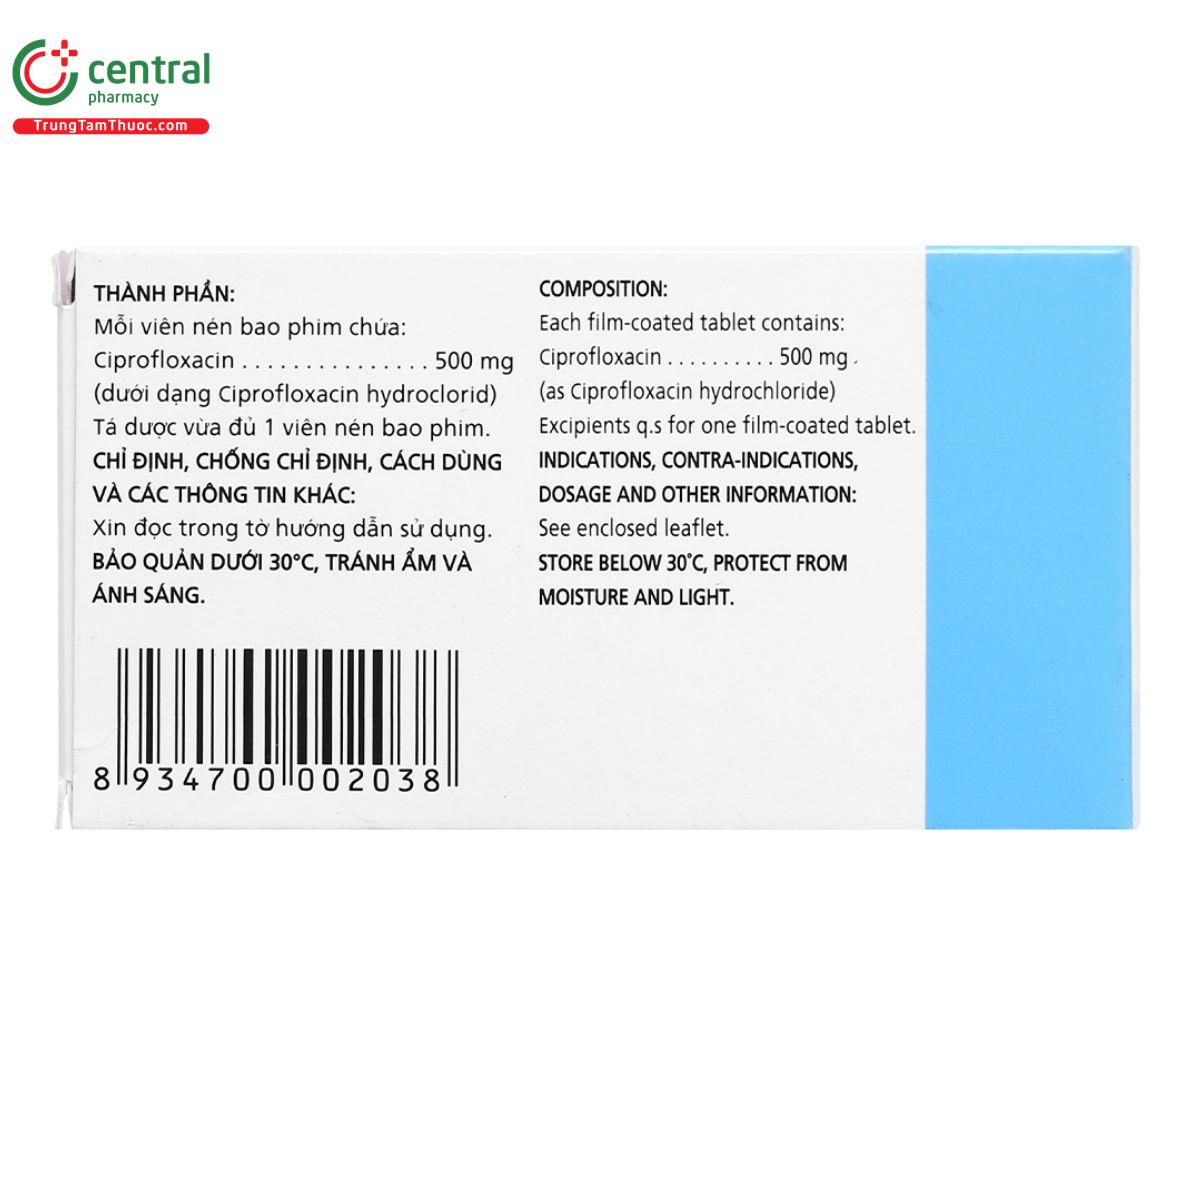 ciprofloxacin 500mg imexpharm 6 I3684